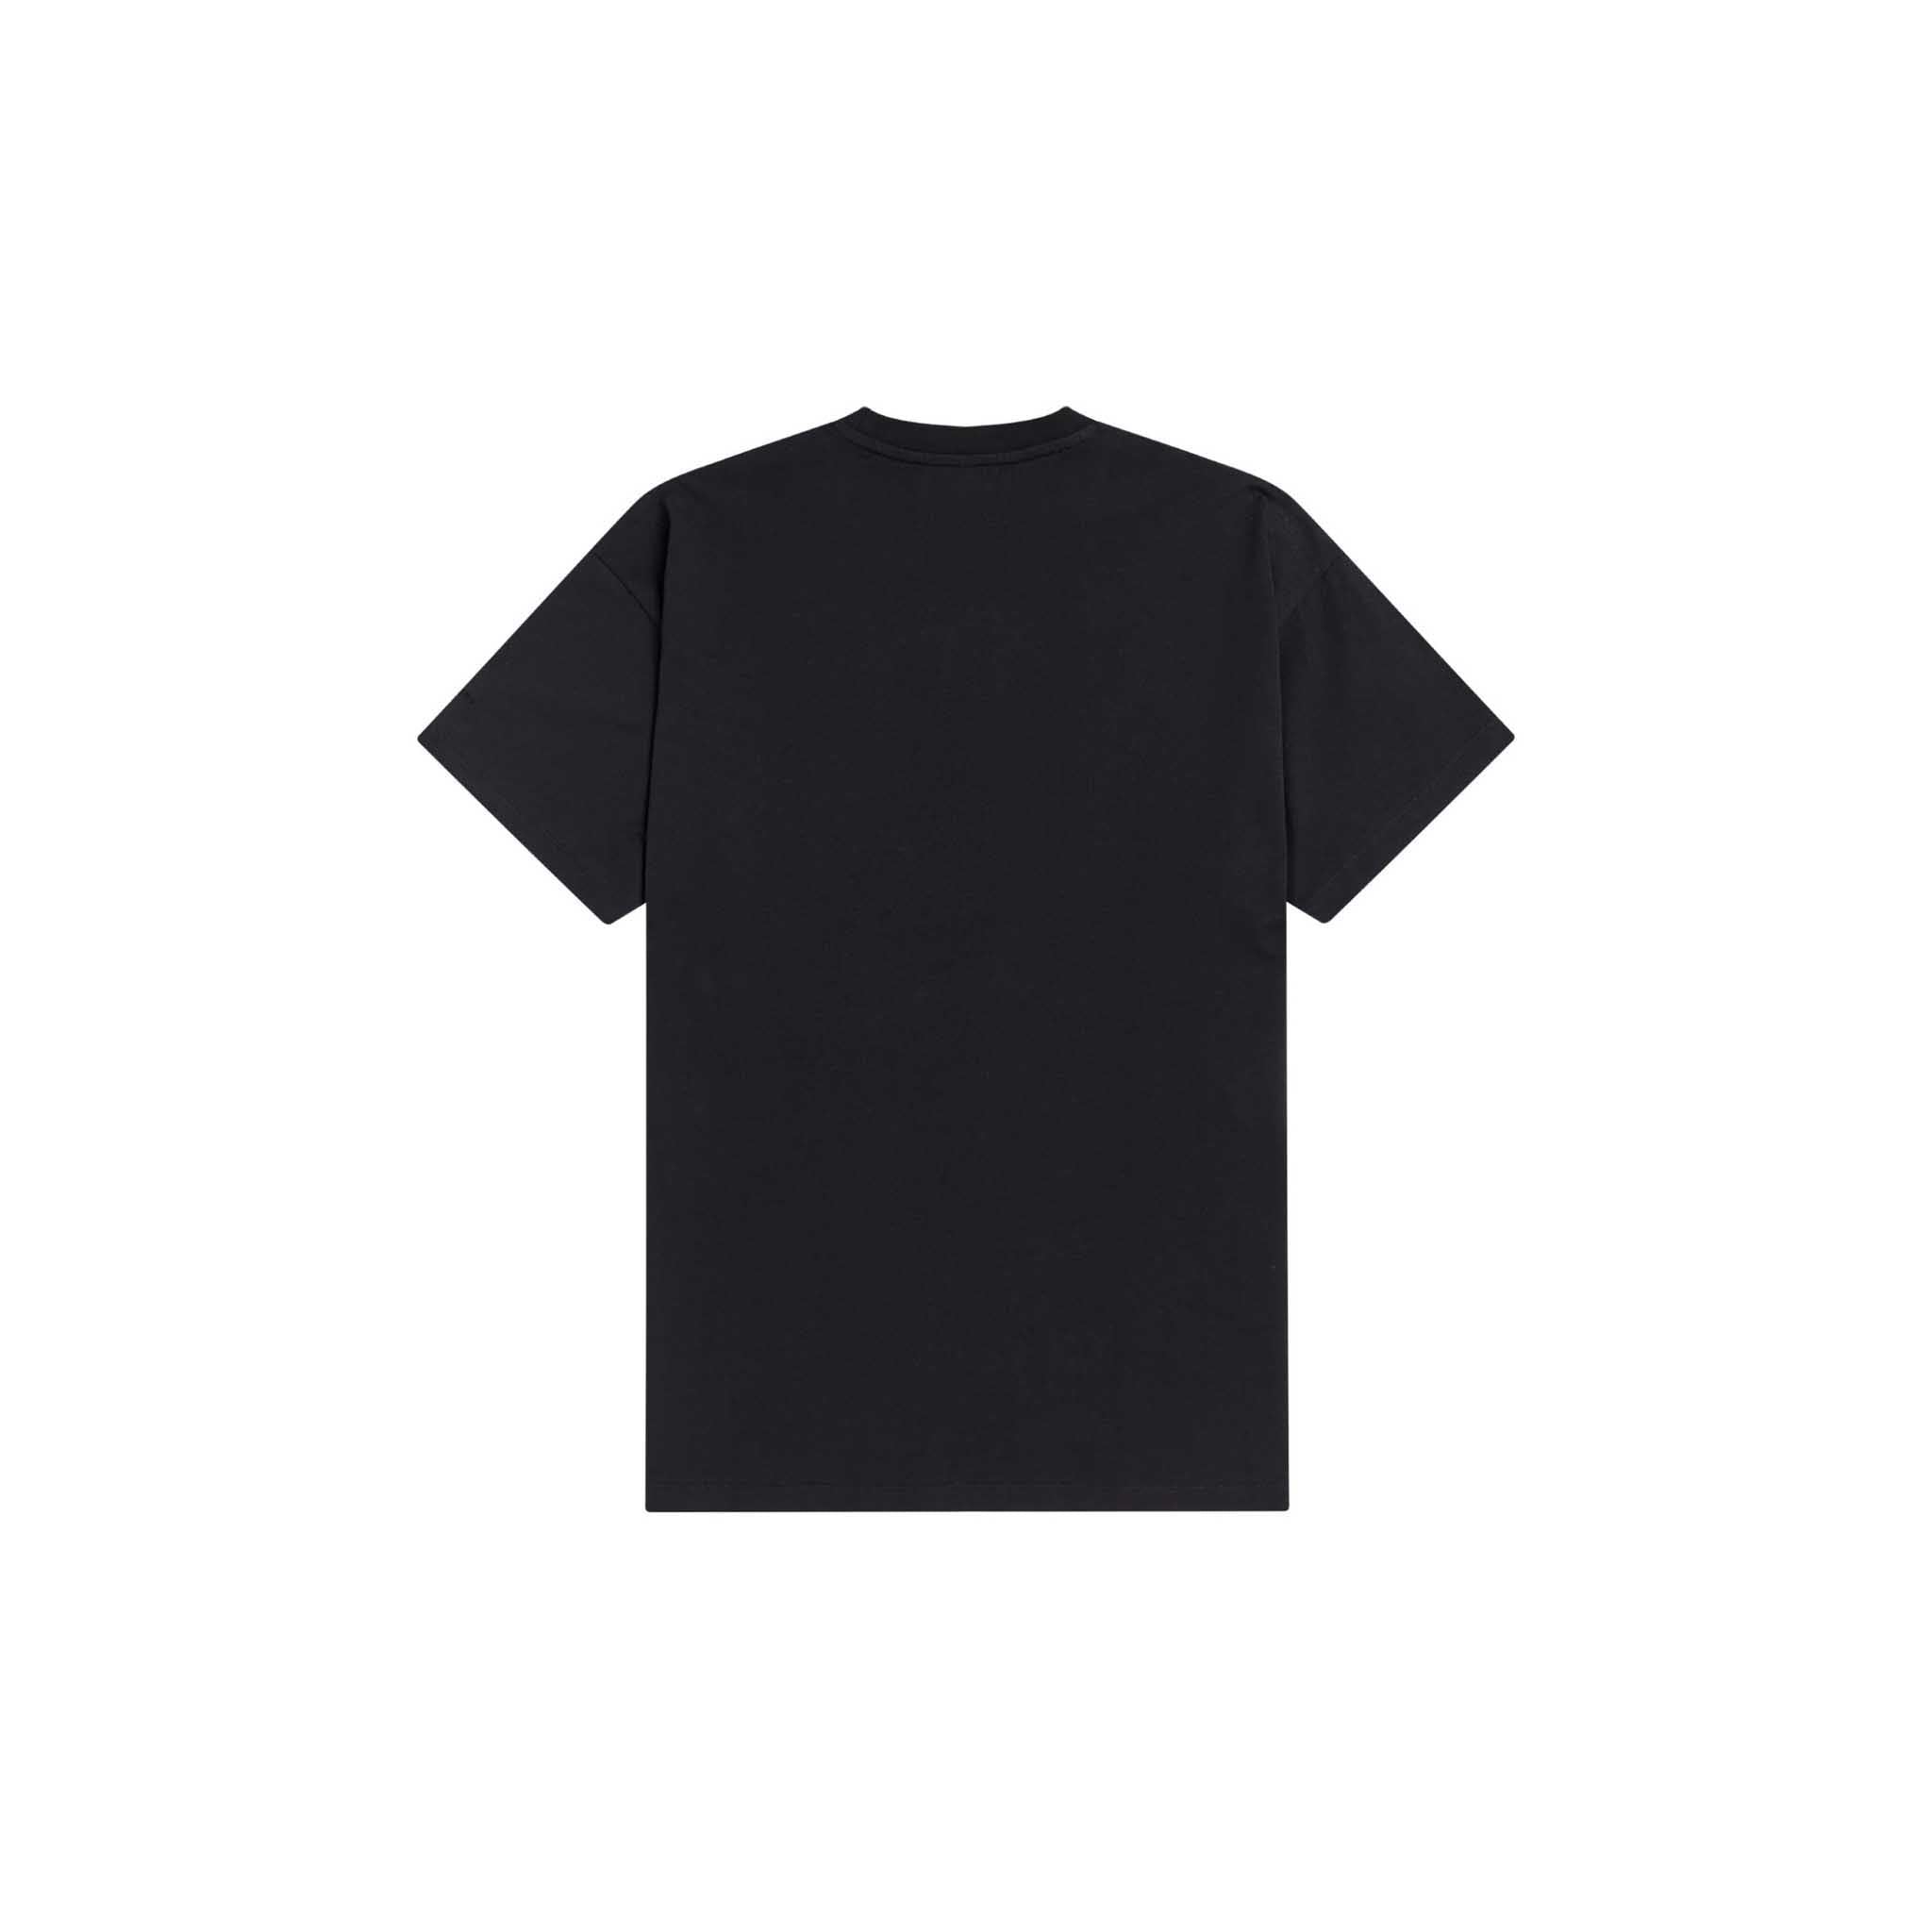 Fred Perry x Raf Simons Printed Patch T-Shirt Black